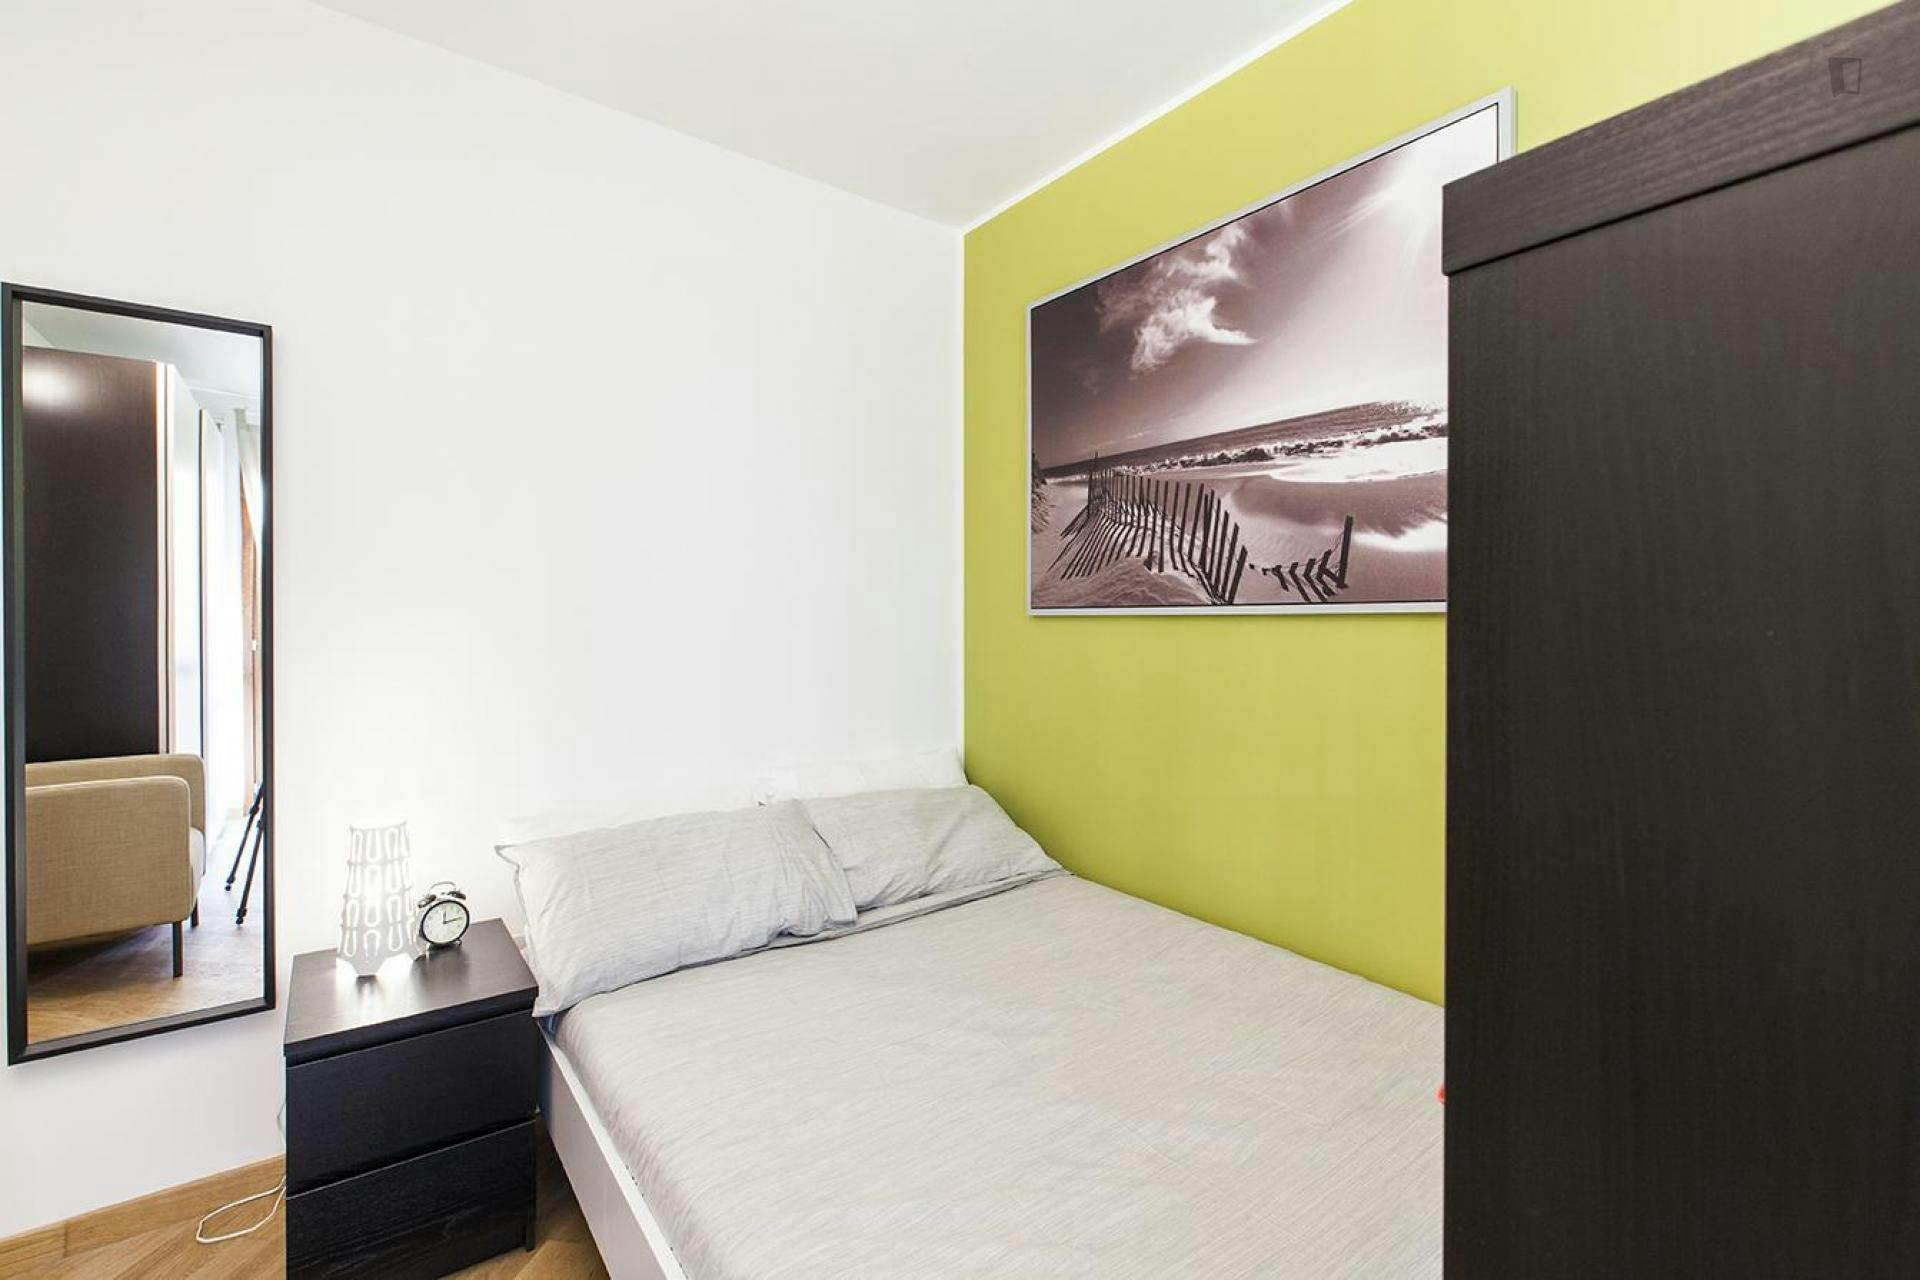 Charming single bedroom near Corvetto metro station